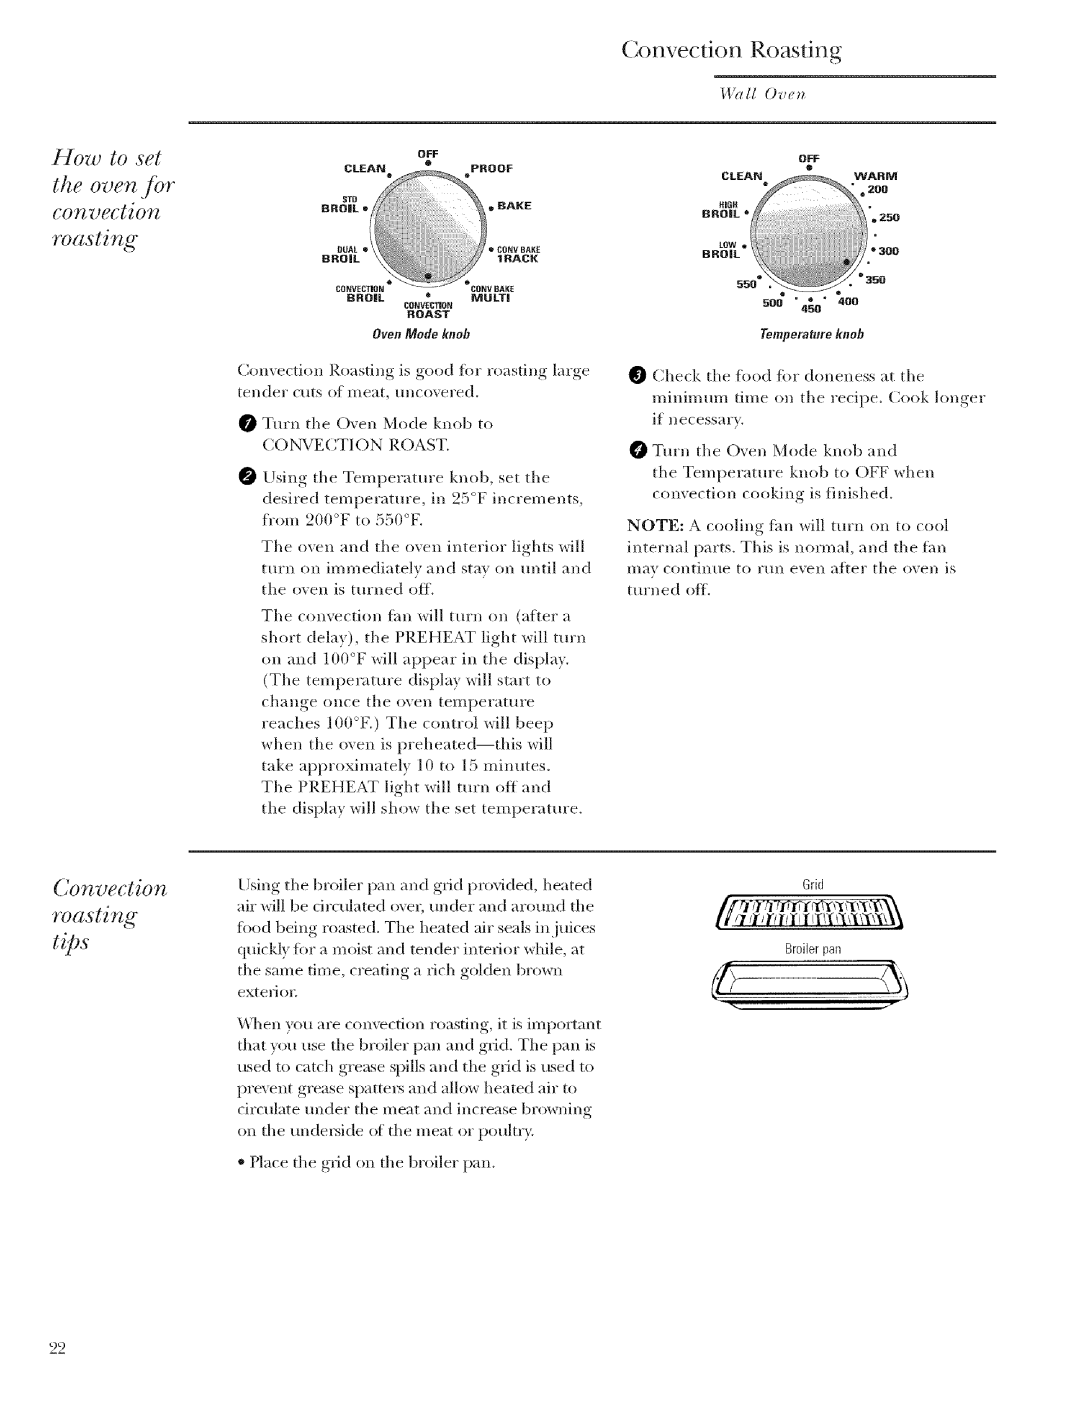 GE Monogram ZET2, ZET1 manual How to set the oven./br convection, roasting, Com/ectlon, Roasting, OvenModeknob 